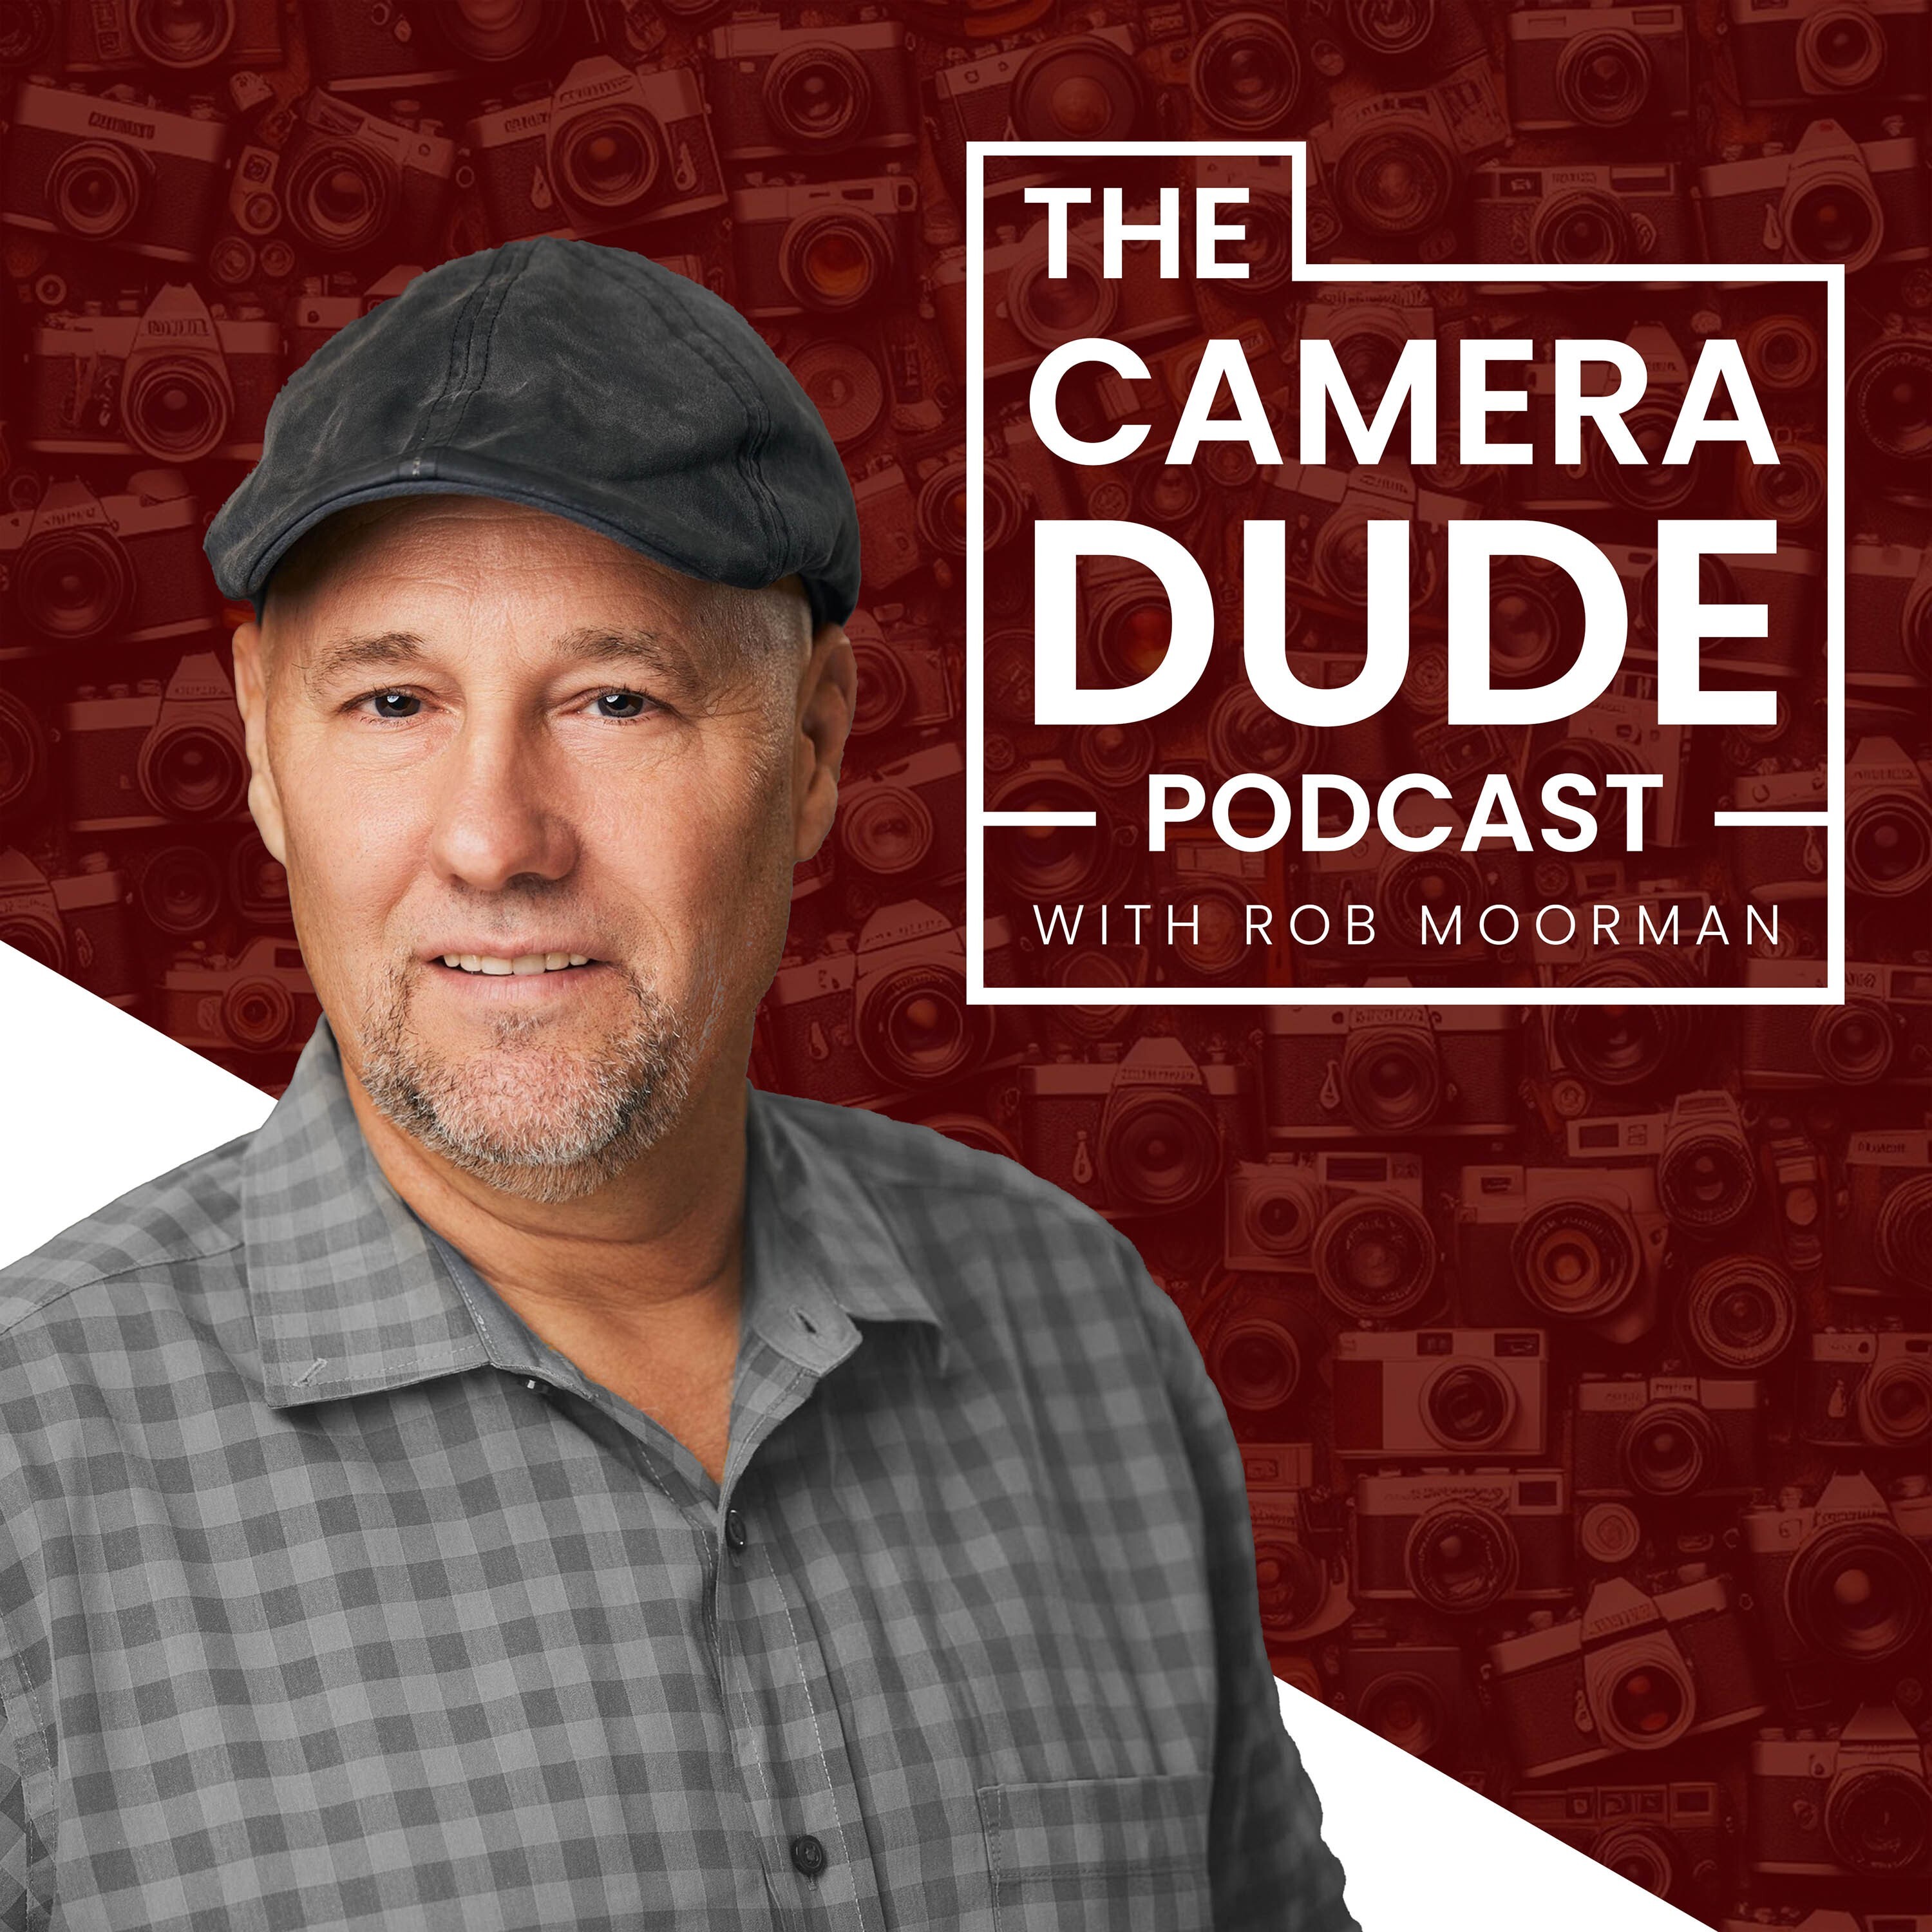 The Camera Dude Podcast